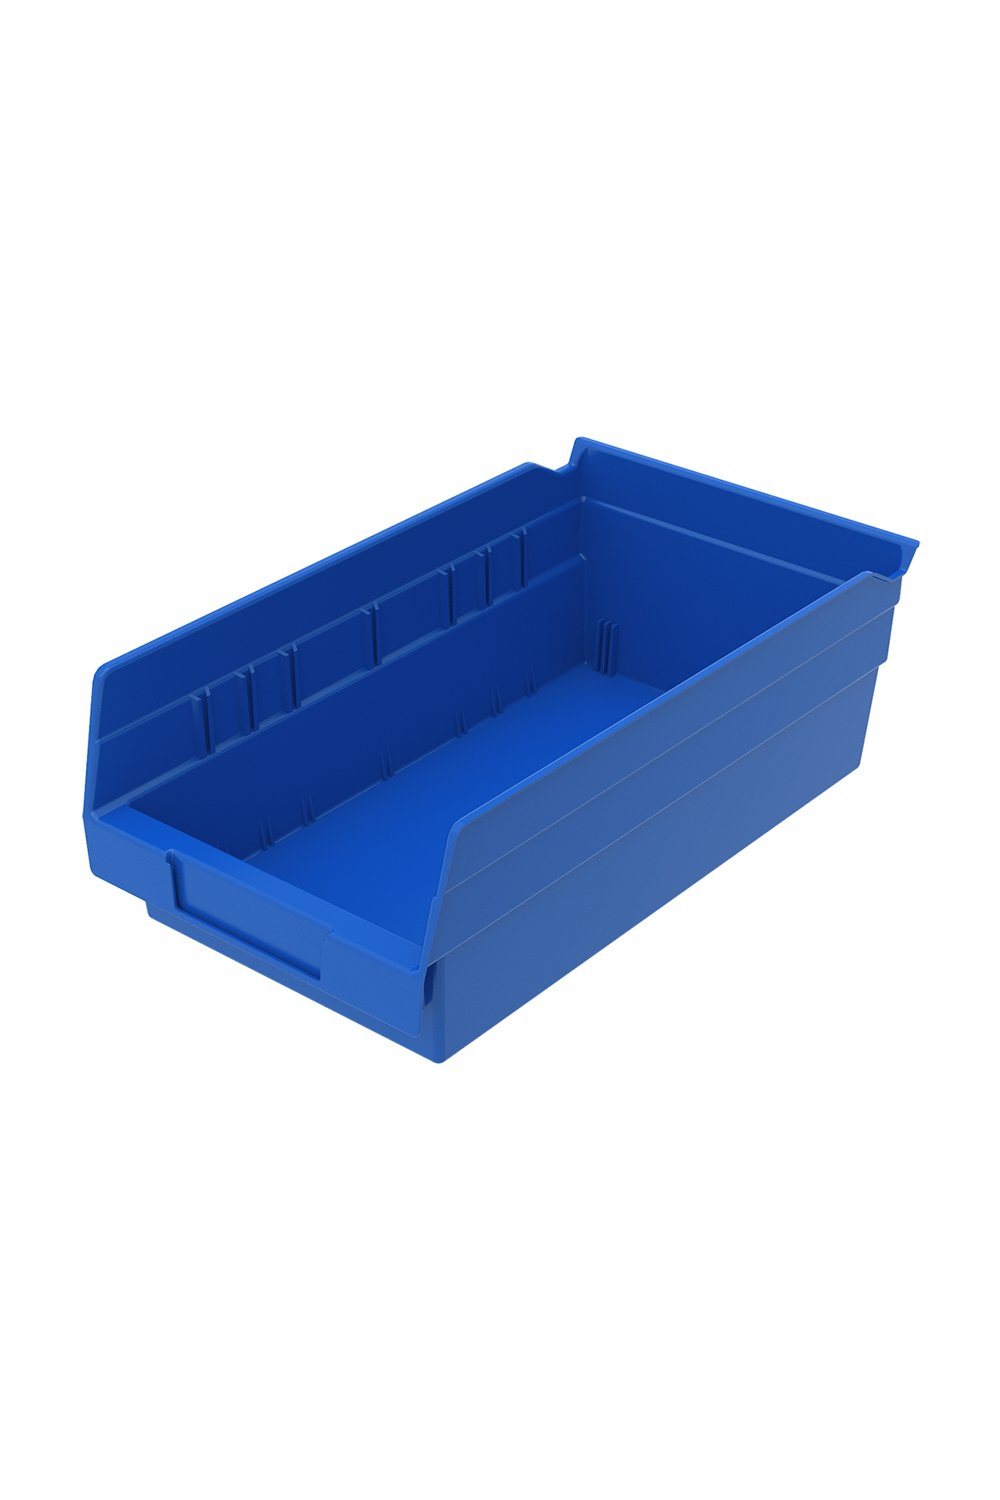 Shelf Bin for 12"D Shelves Bins & Containers Acart 11-5/8'' x 6-5/8'' x 4'' Blue 